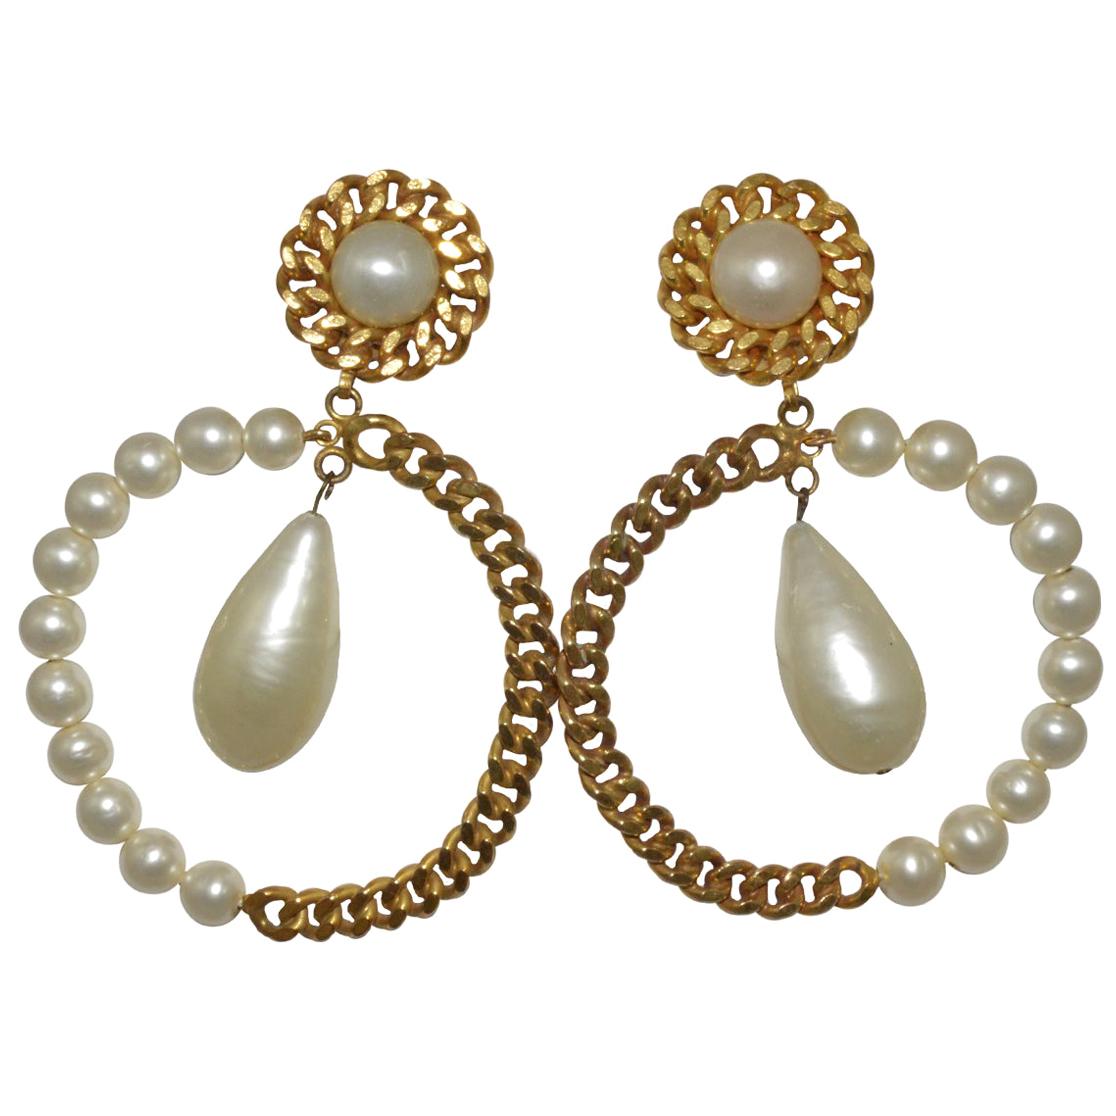 Vintage Chanel Pearl & Chain Hoop Earrings with Large Pearl Drop